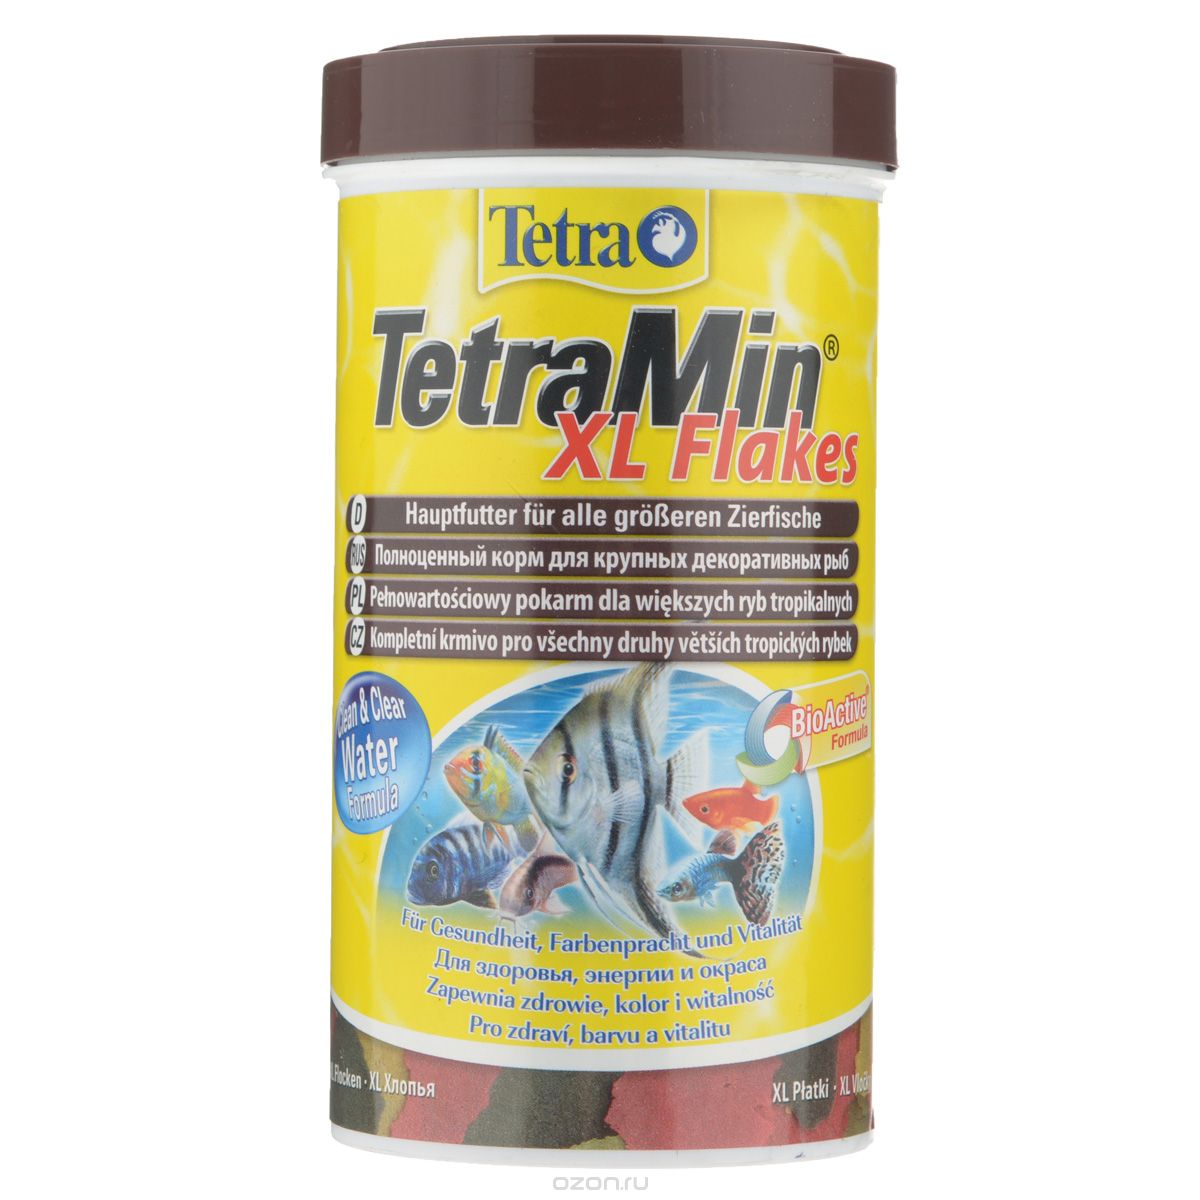  TetraMin 